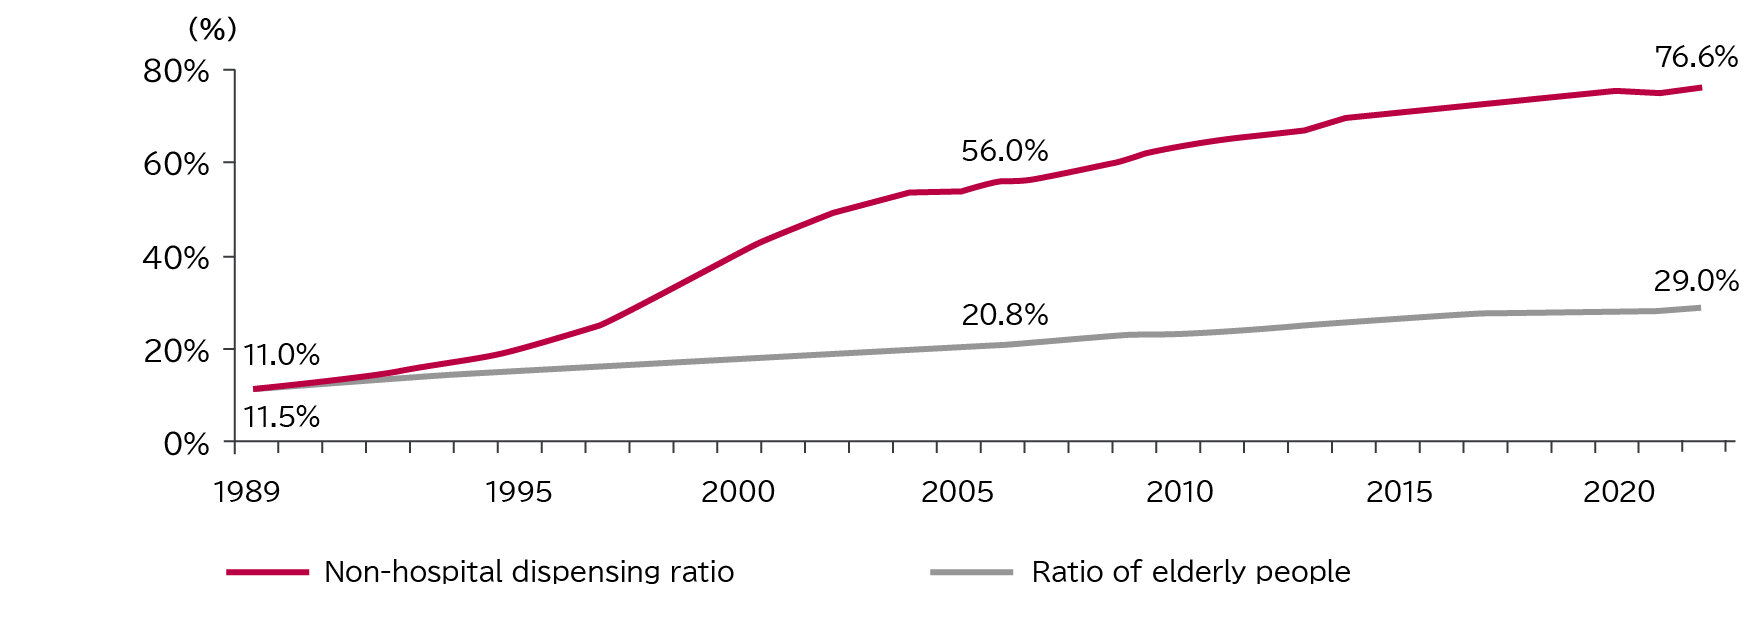 Non-hospital dispensing ratio/Ratio of elderly people